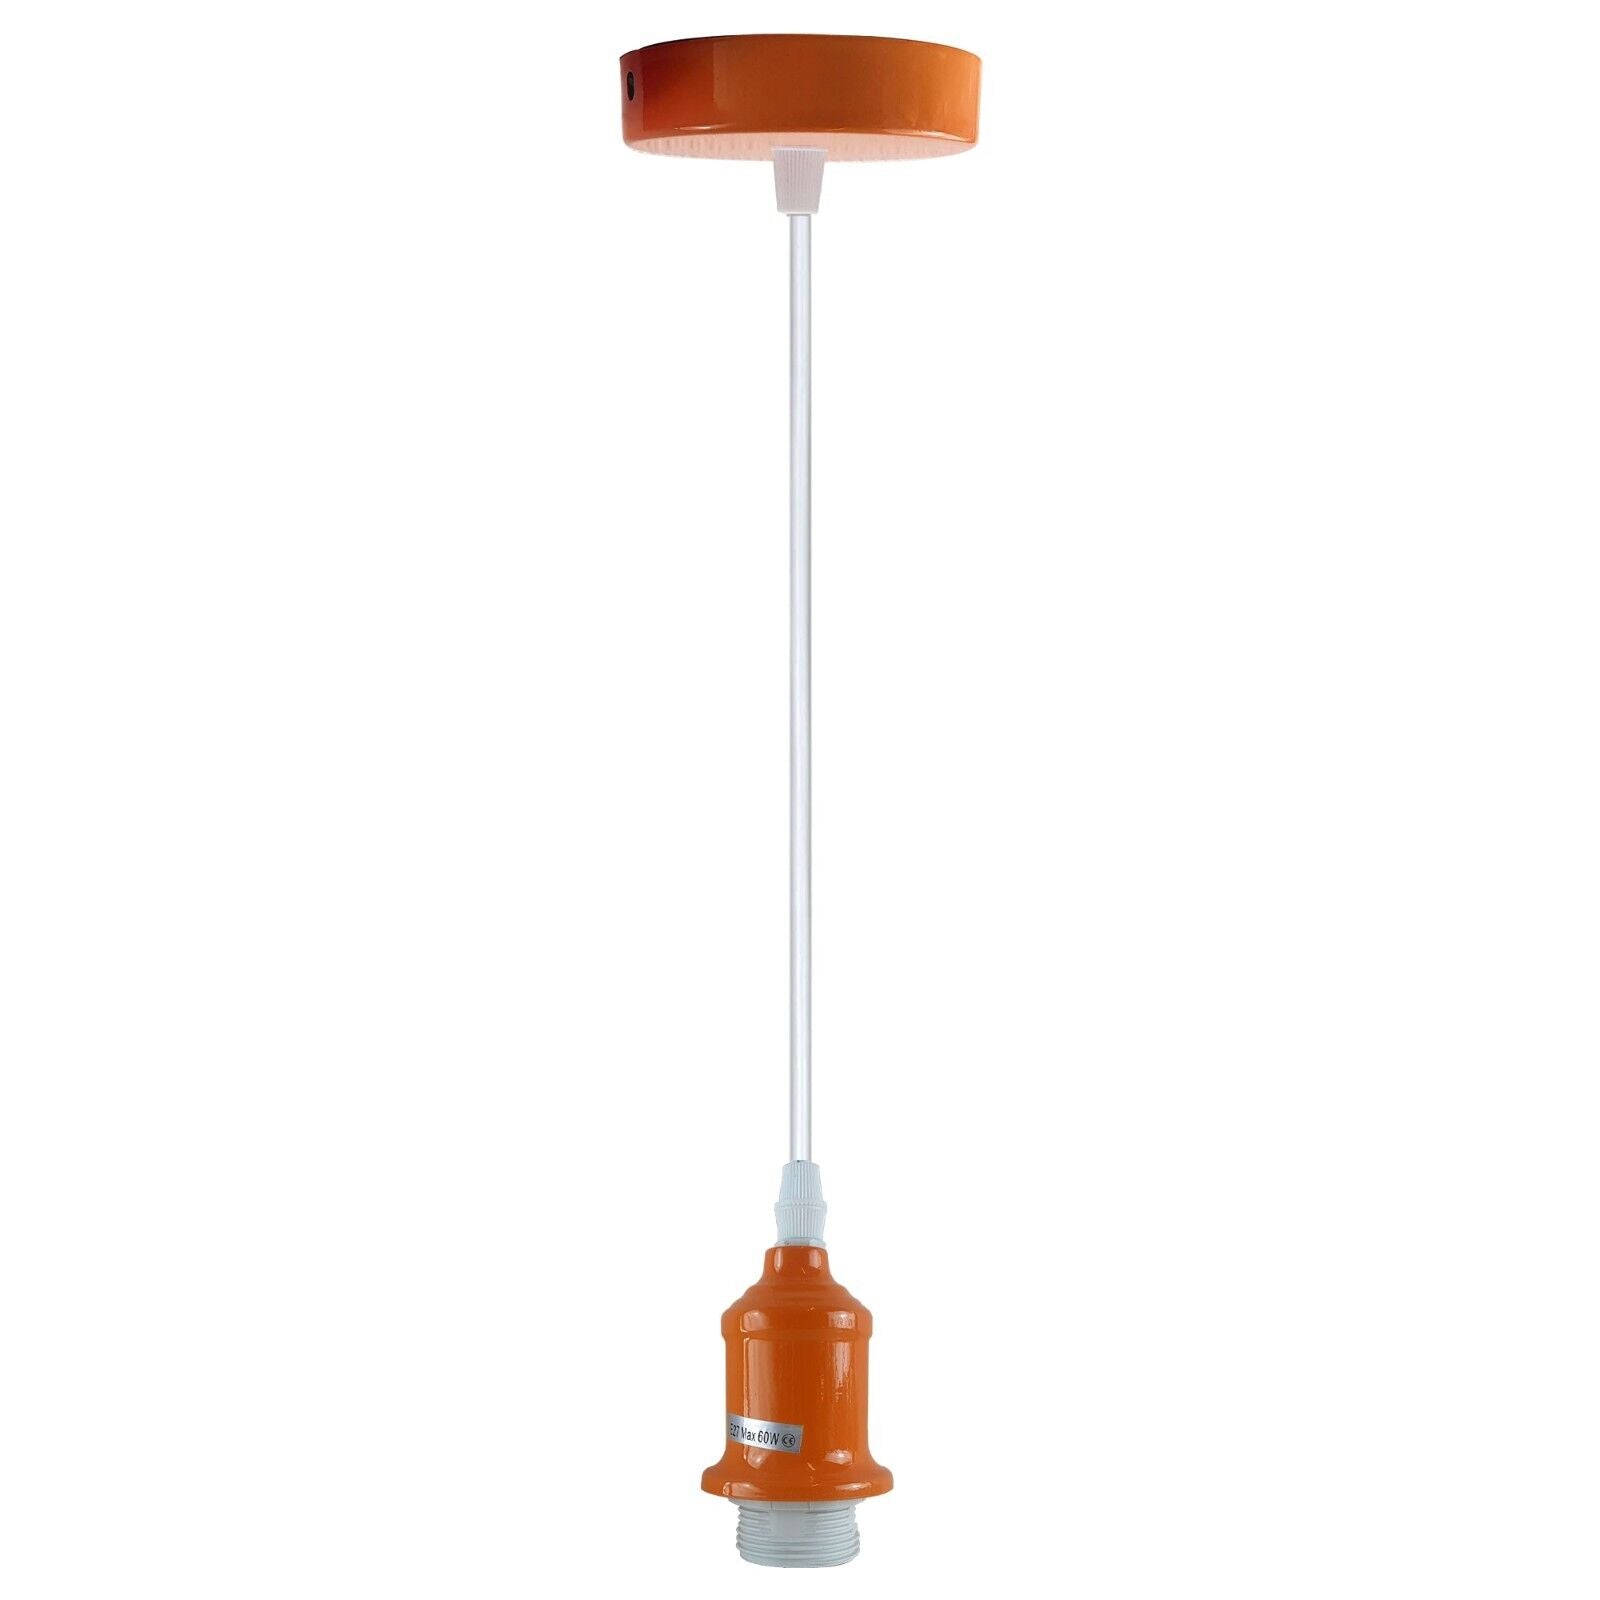 Industrial Vintage Orange Ceiling Light Fitting E27 Pendant Holder